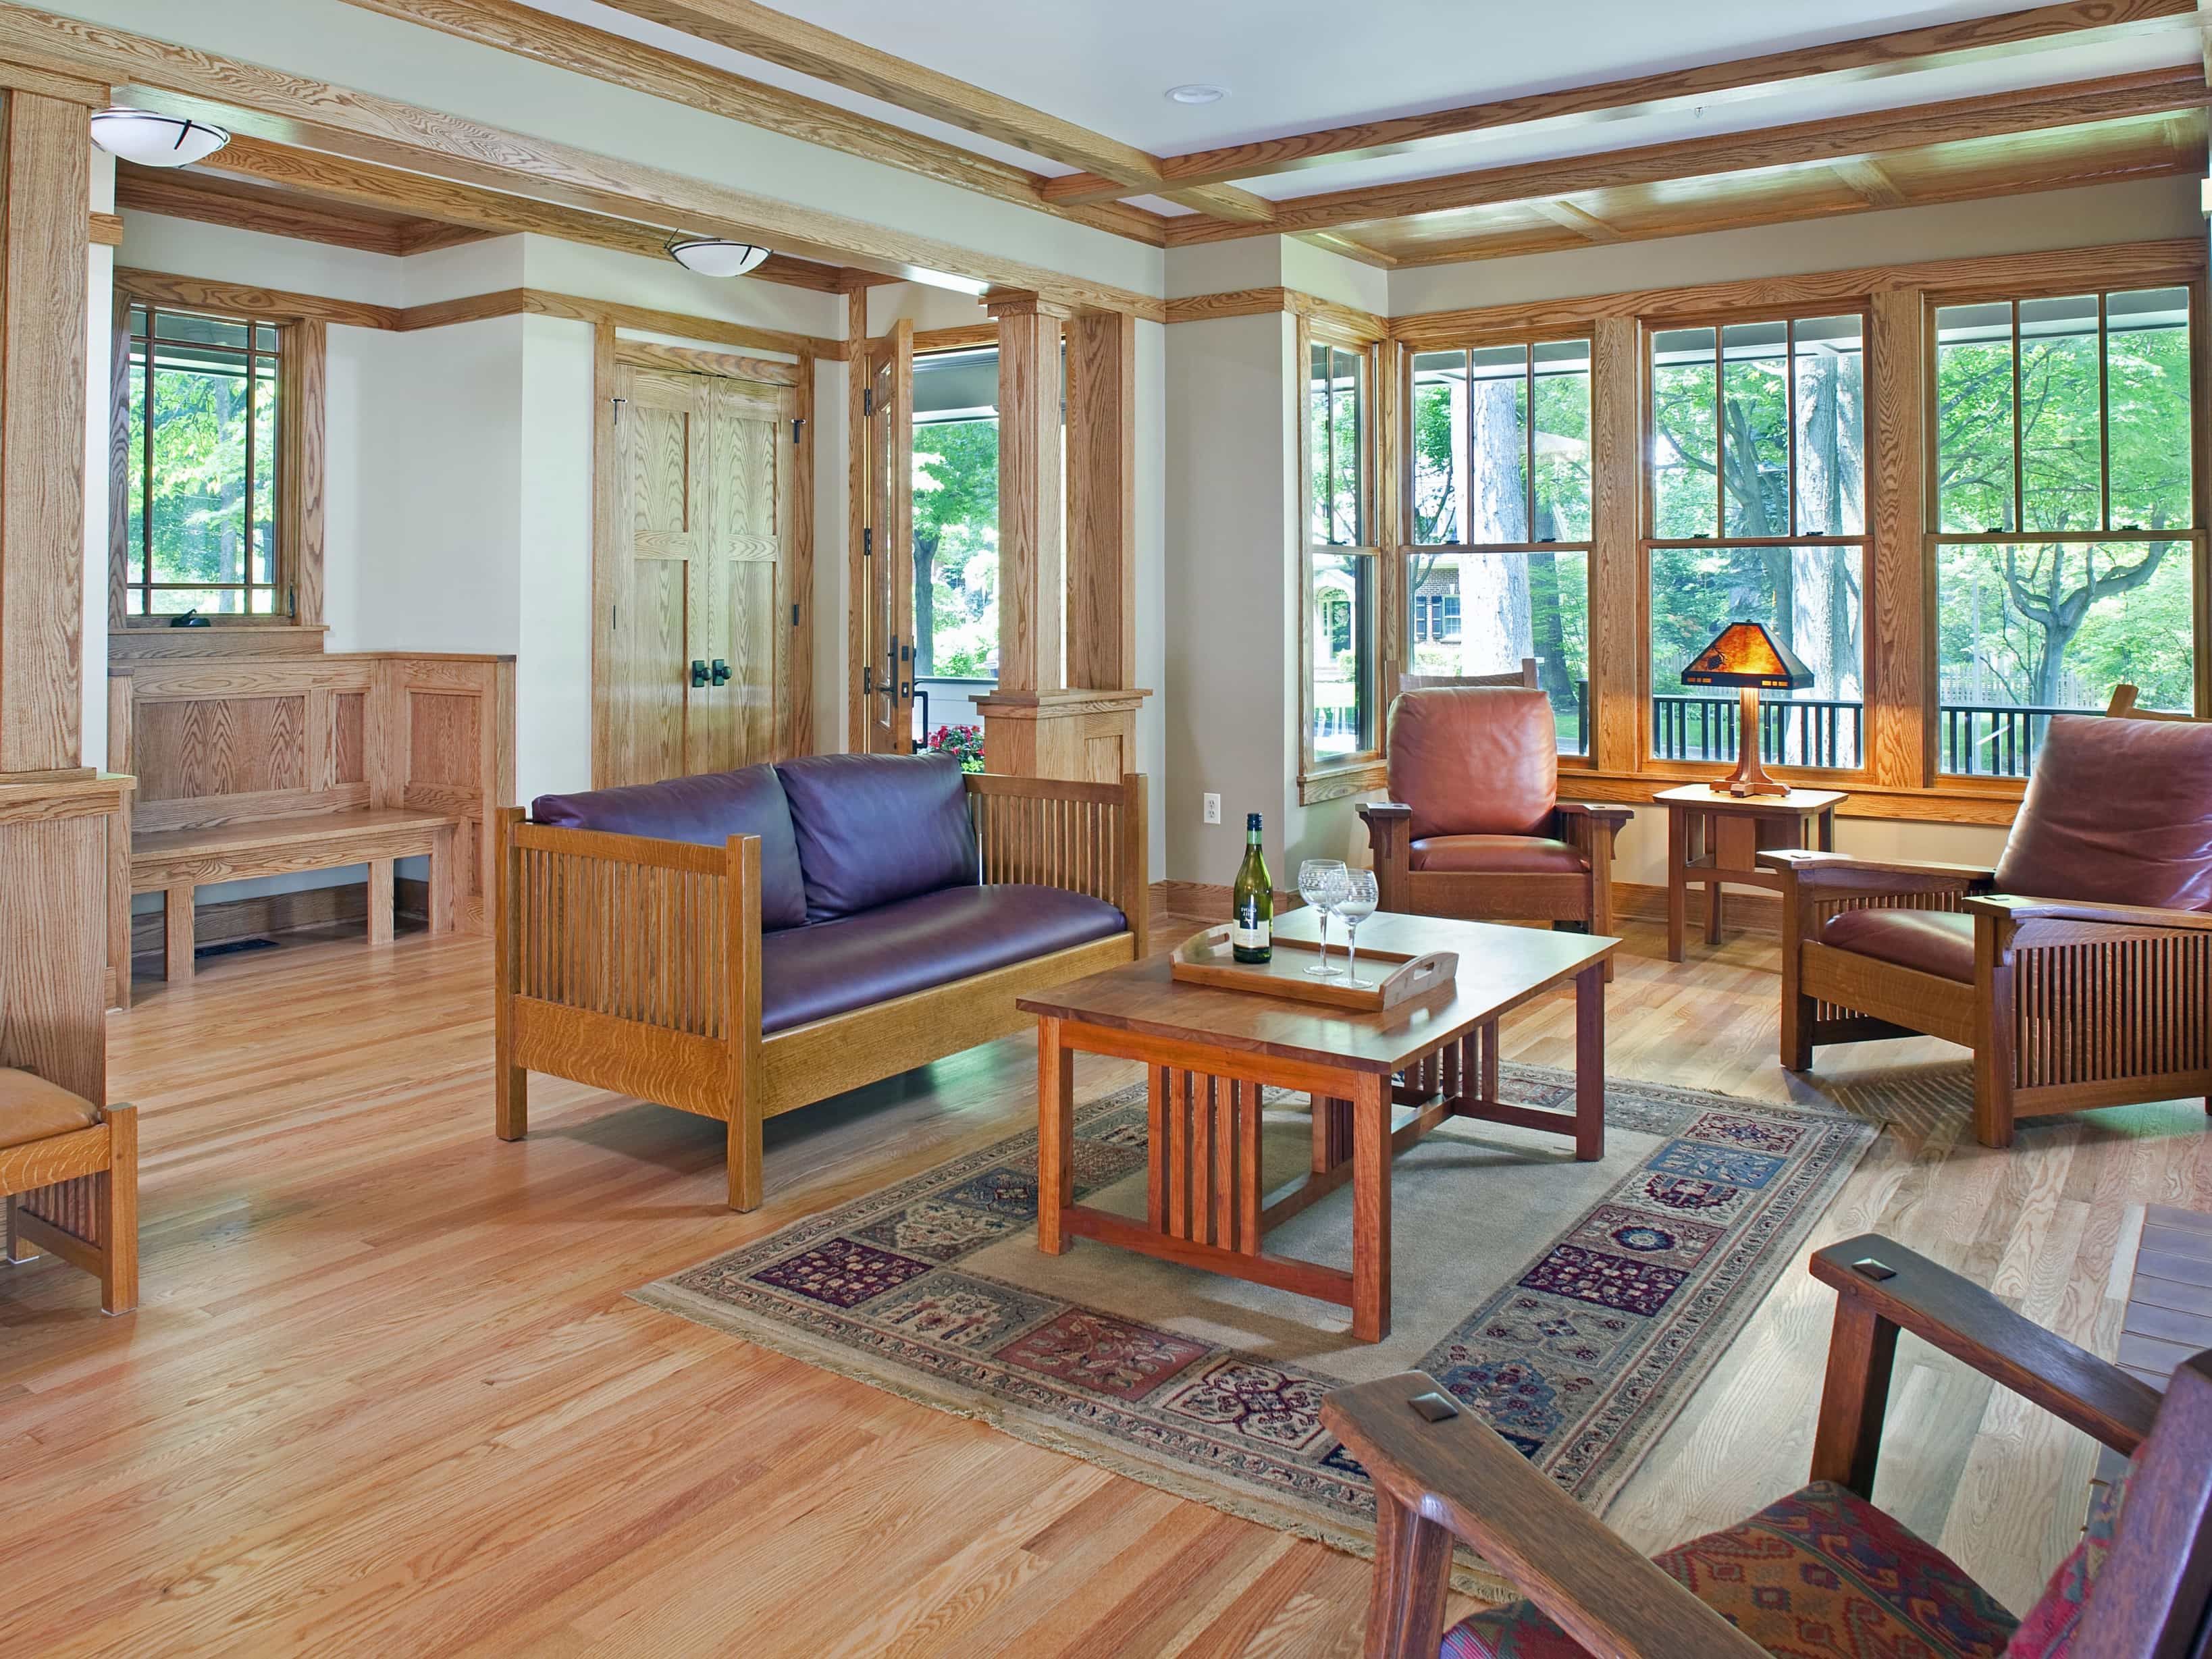 light oak flooring living room